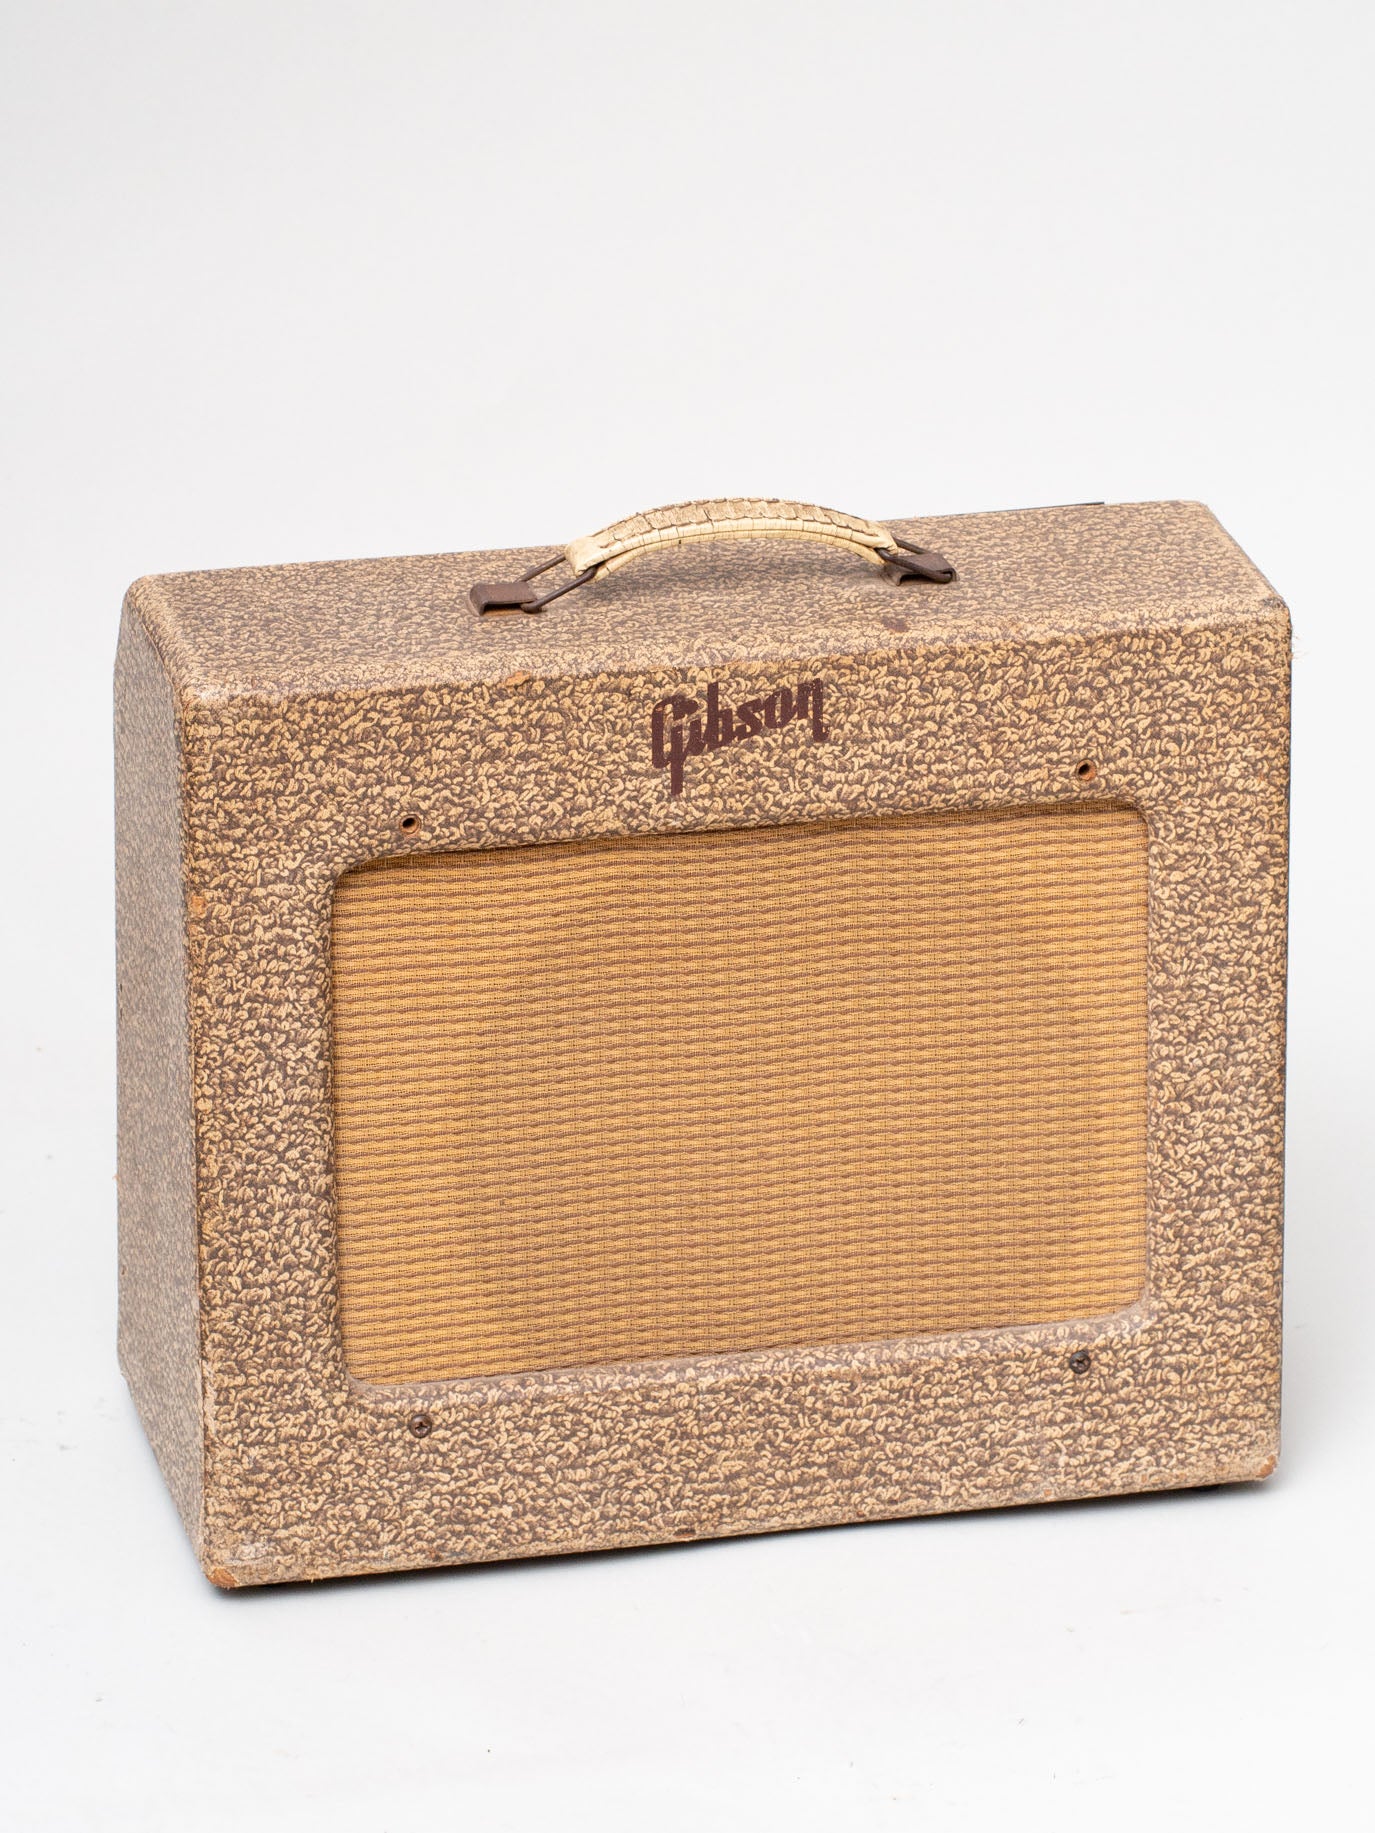 1950s Gibson Les Paul Amplifier